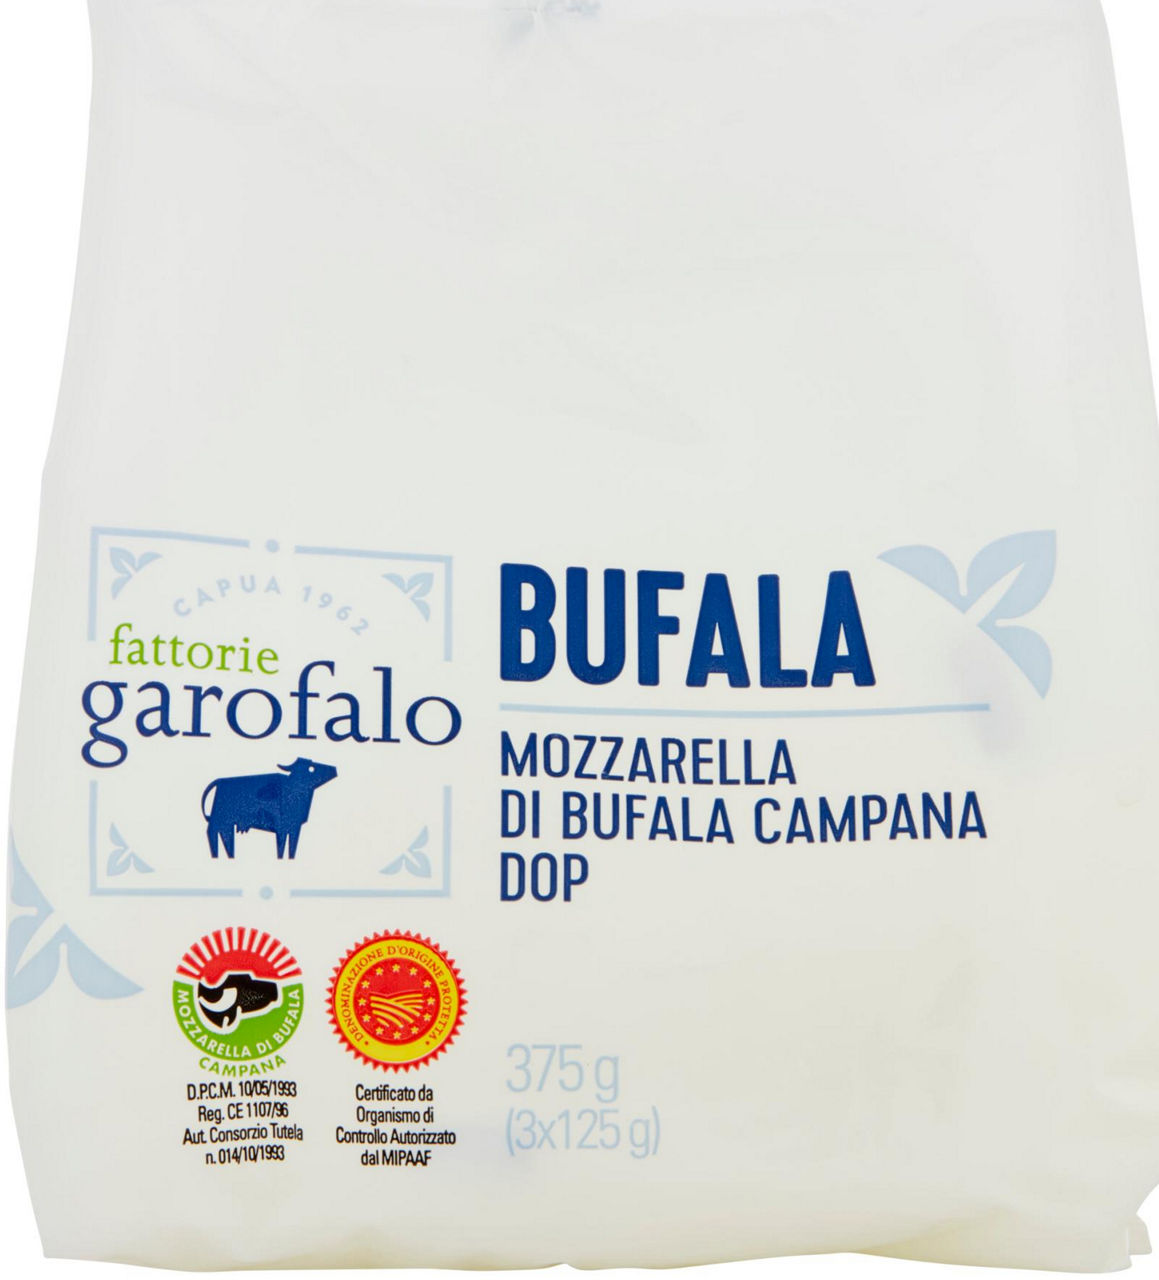 Fattorie garofalo bufala mozzarella di bufala campana dop 3 x 125 g